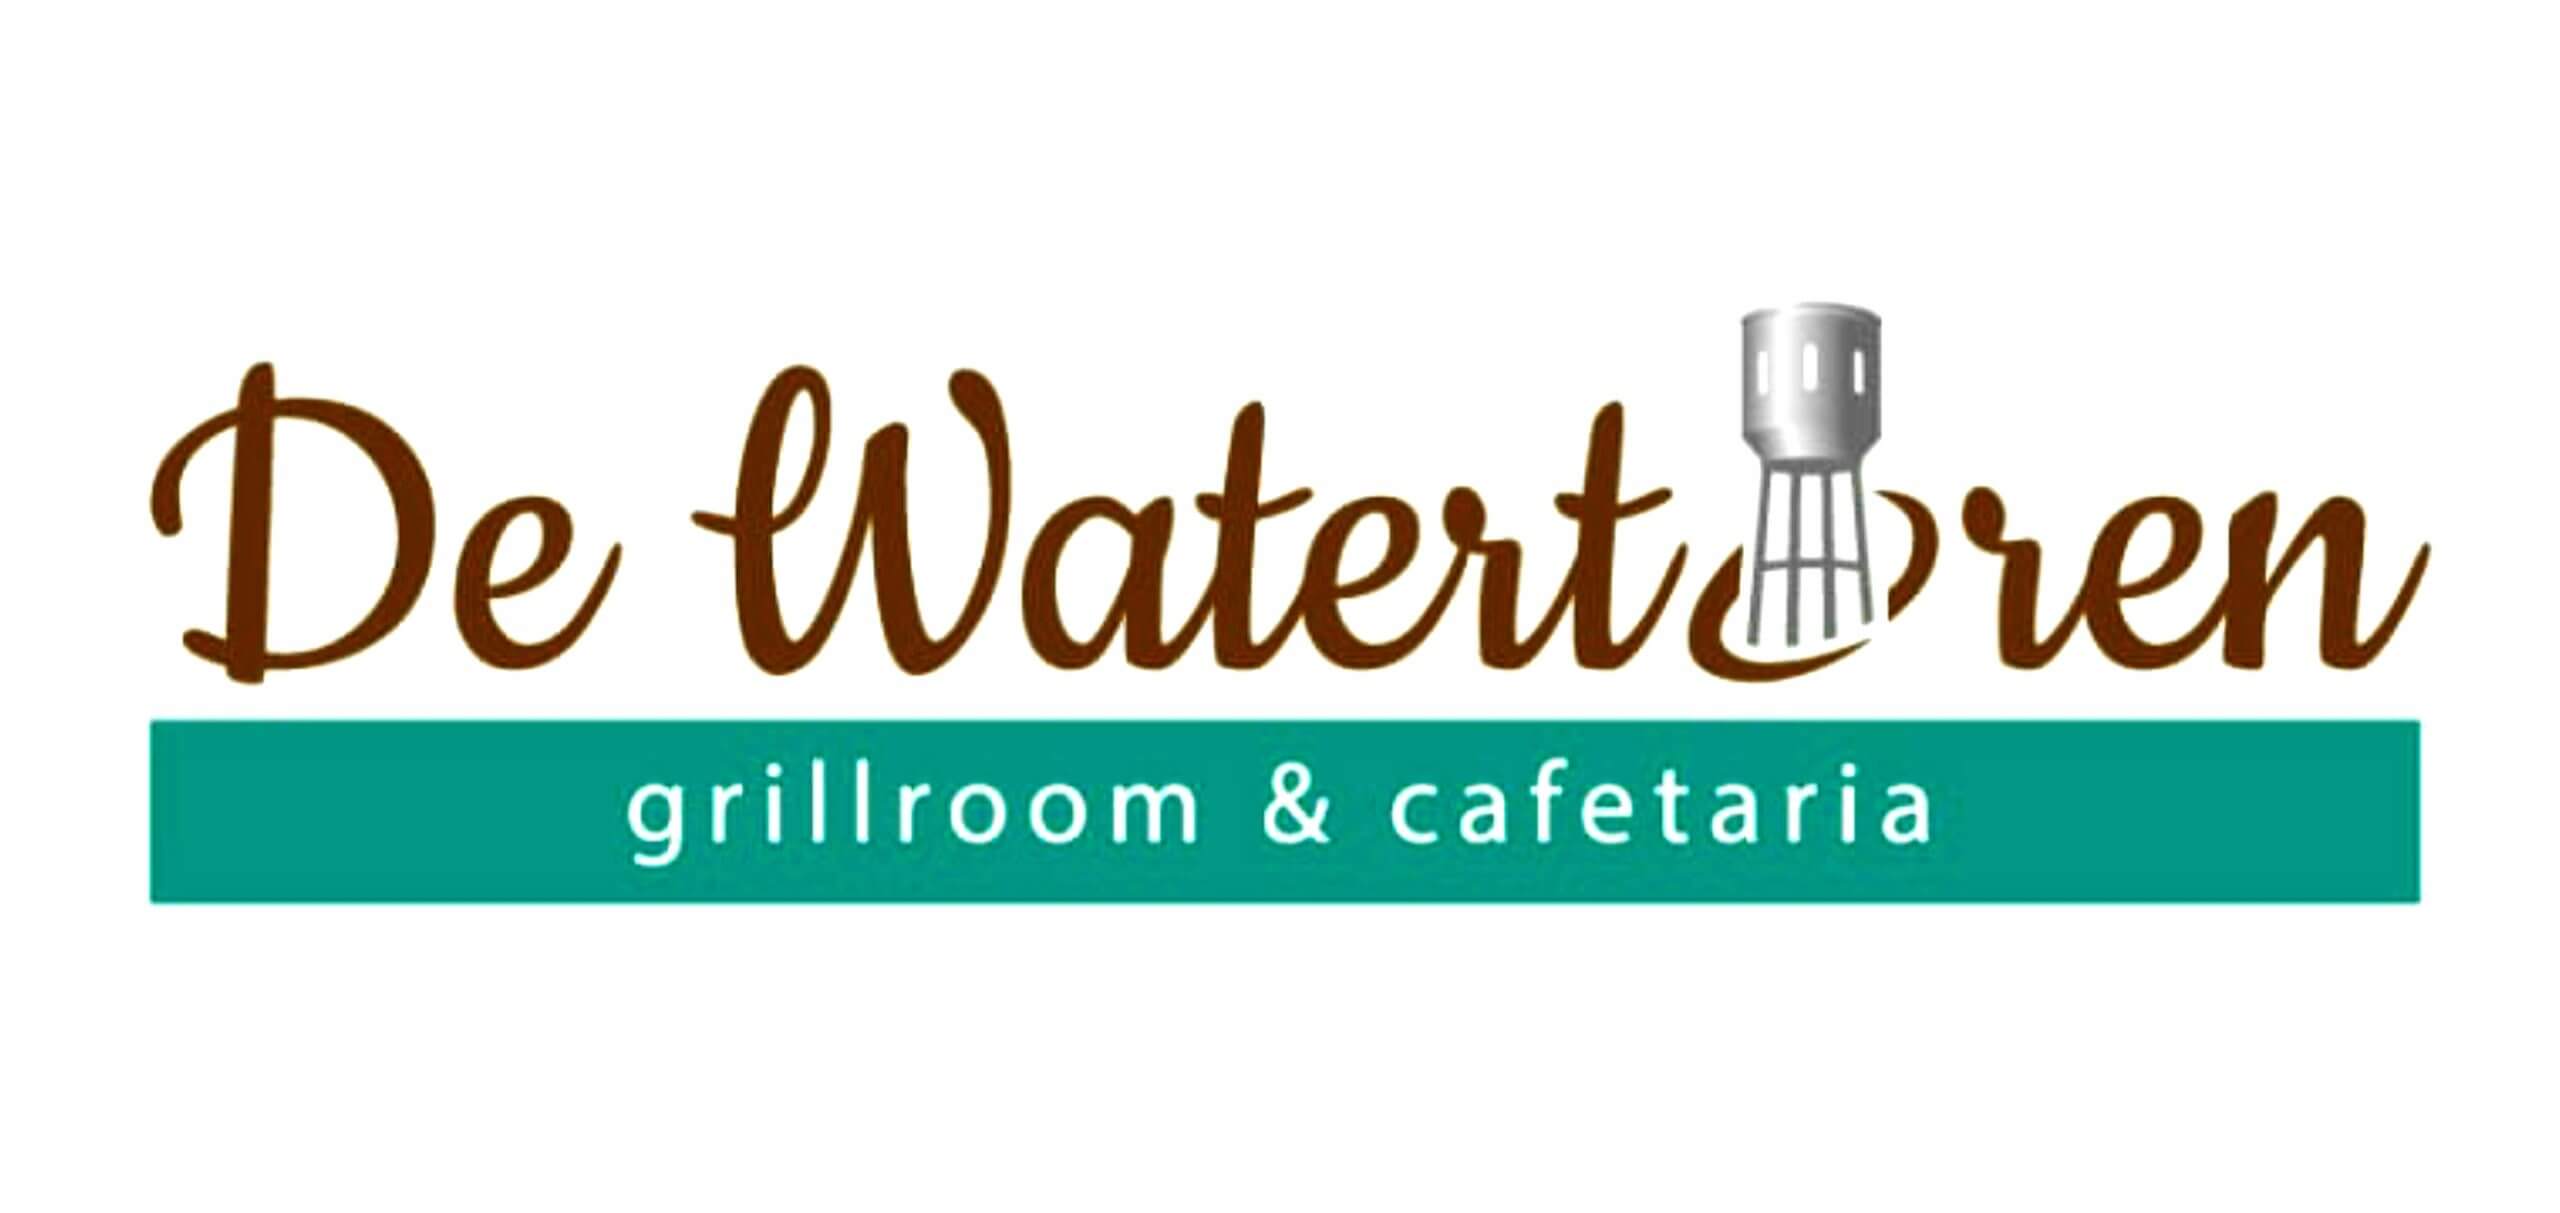 de watertoren logo (1)